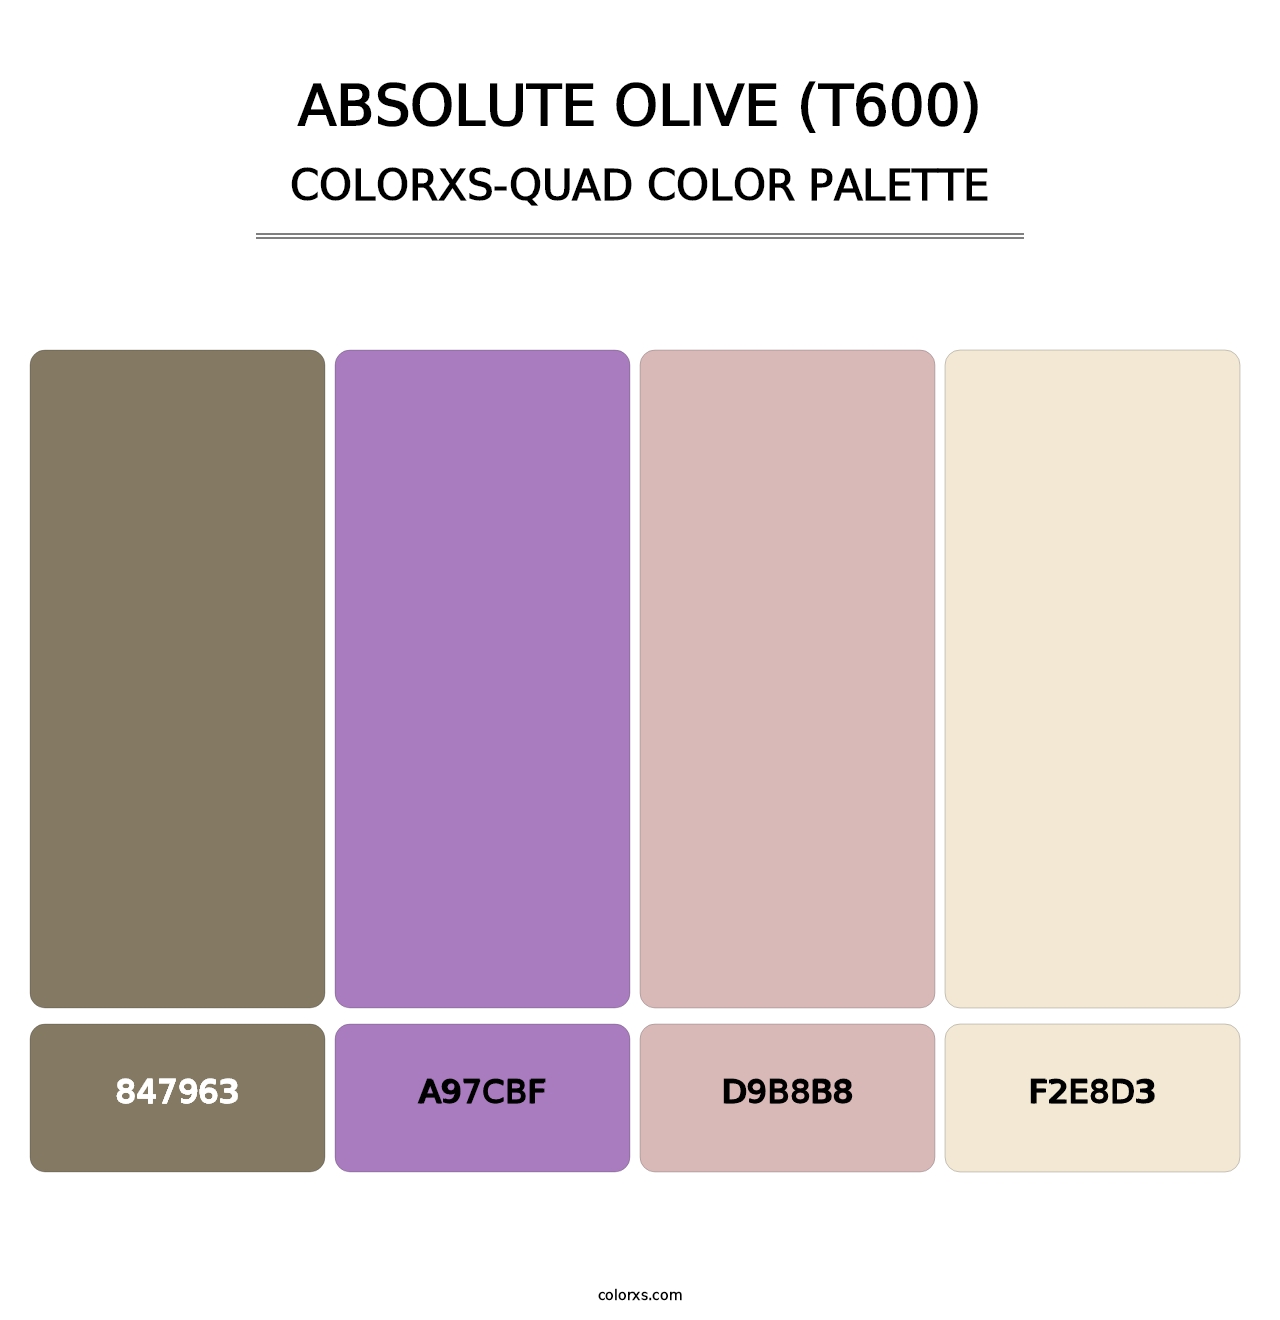 Absolute Olive (T600) - Colorxs Quad Palette